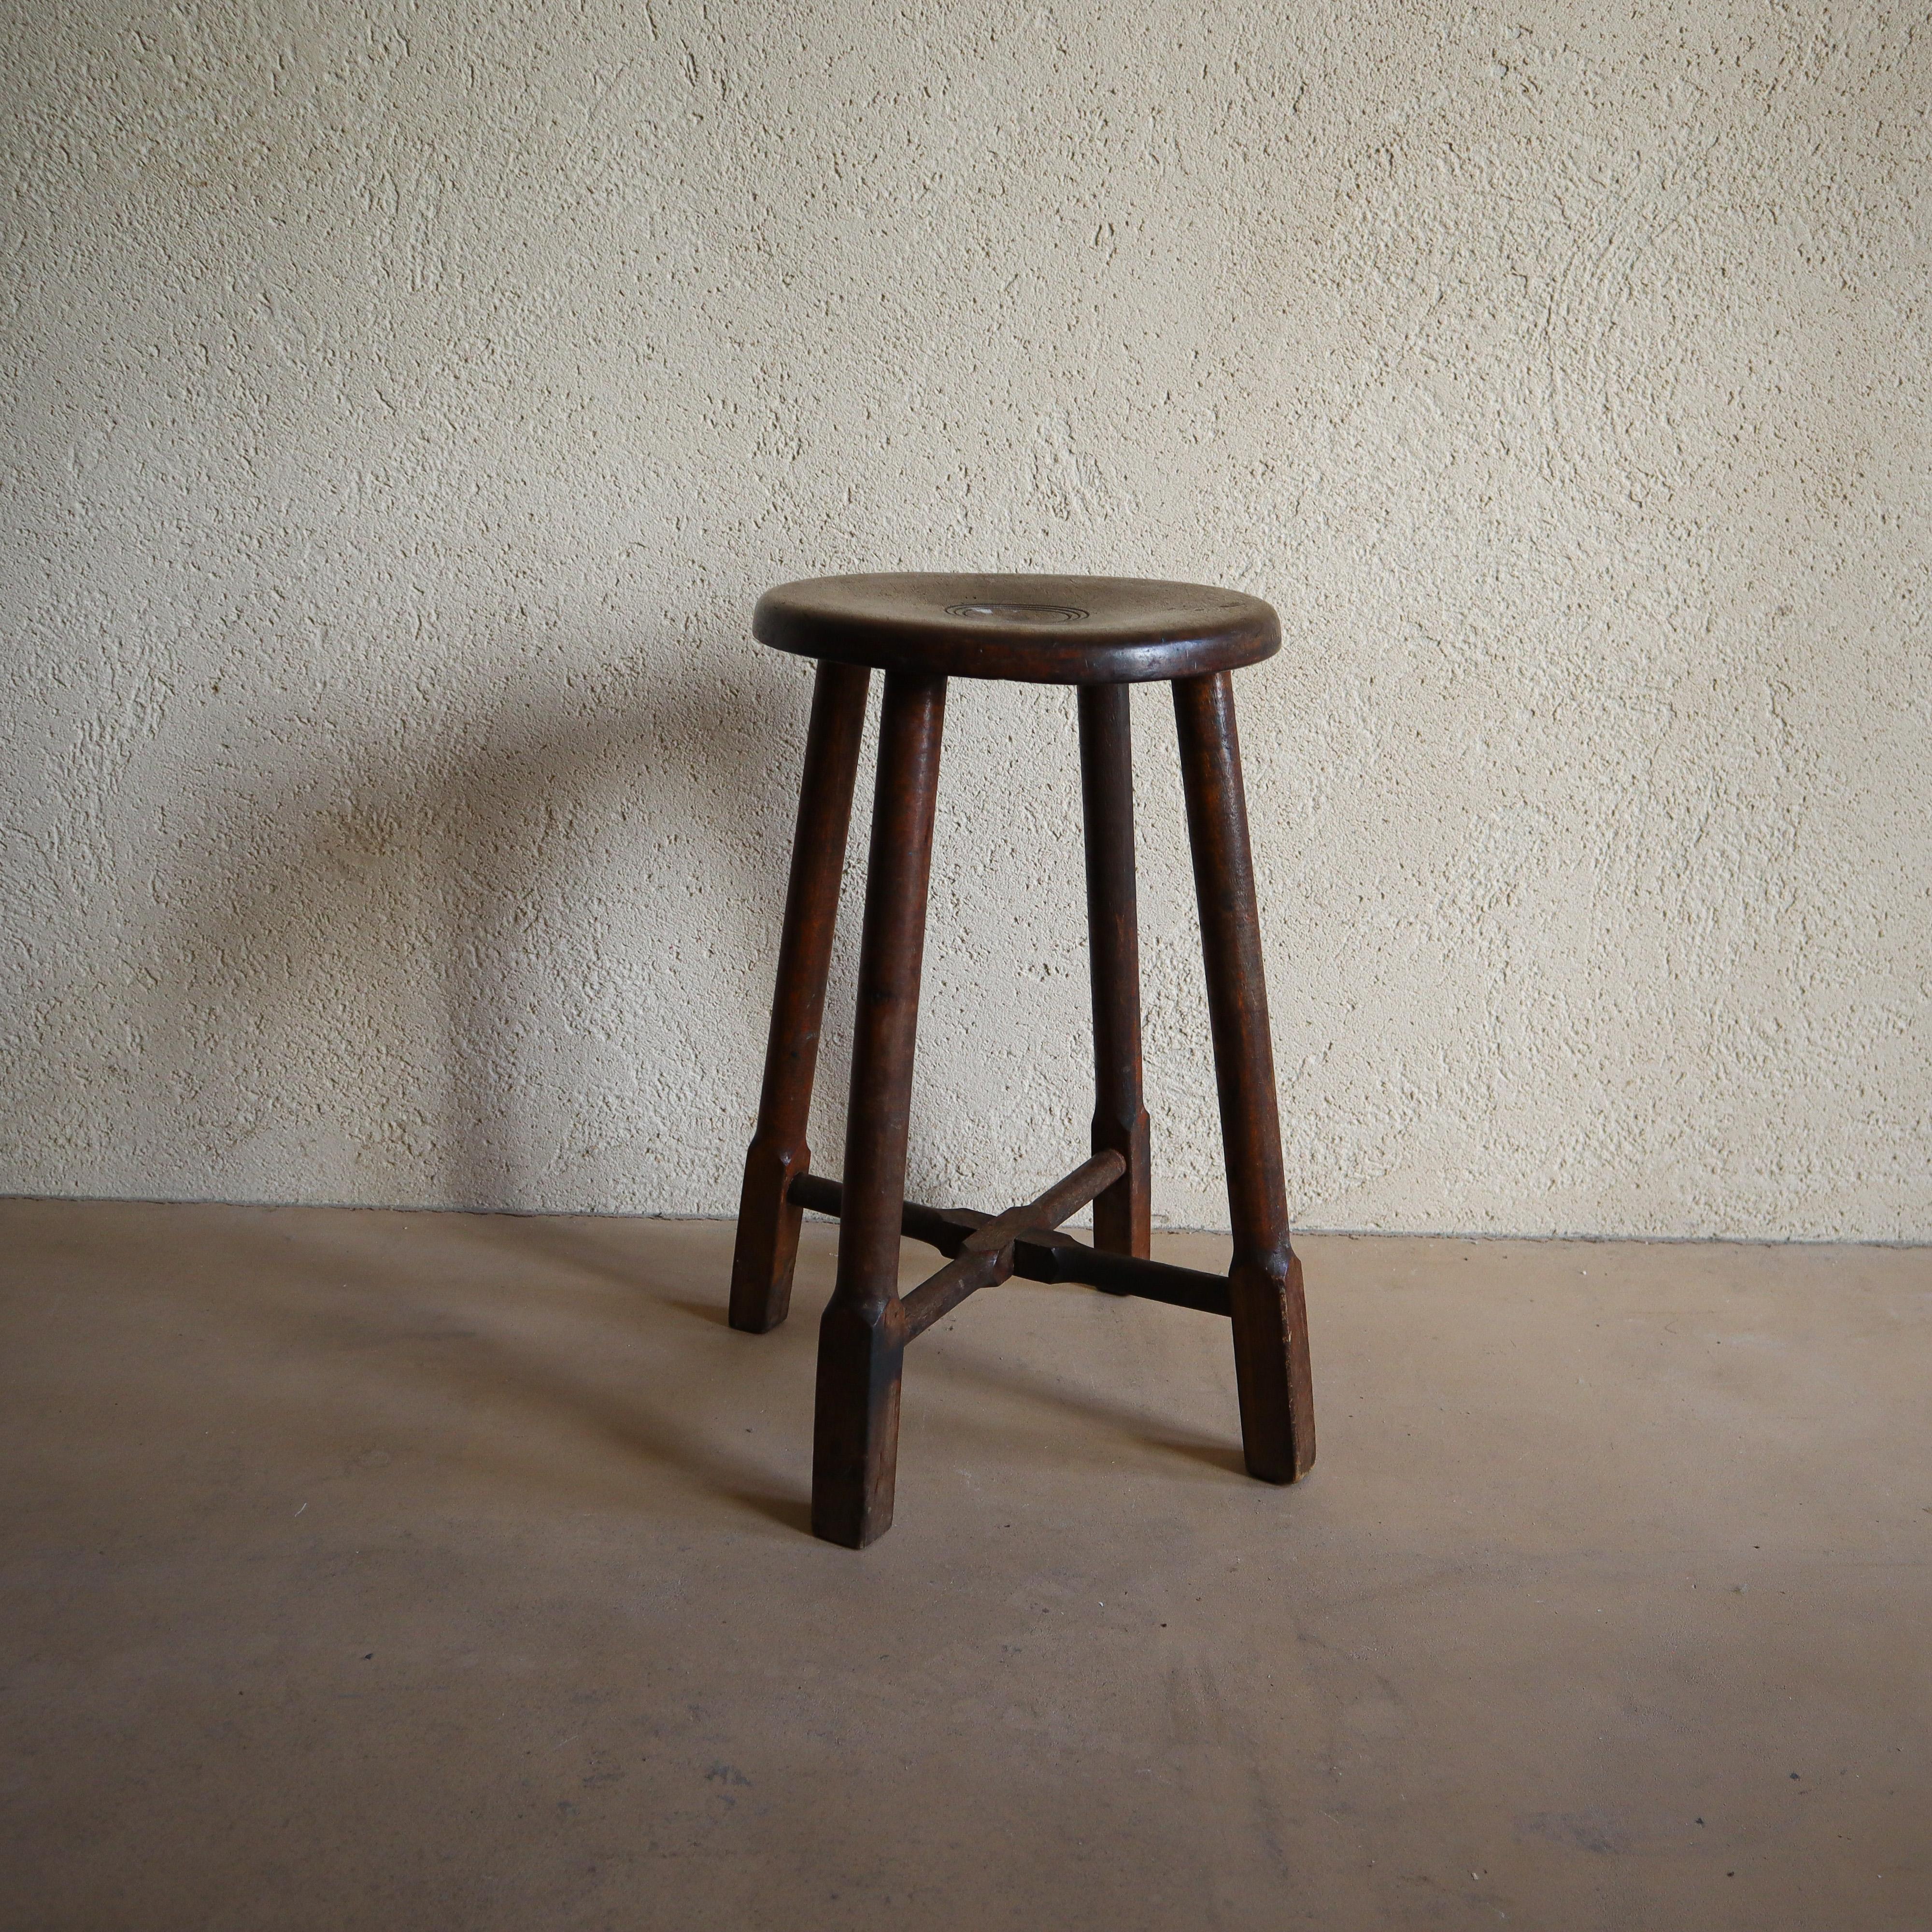 traditional japanese stool